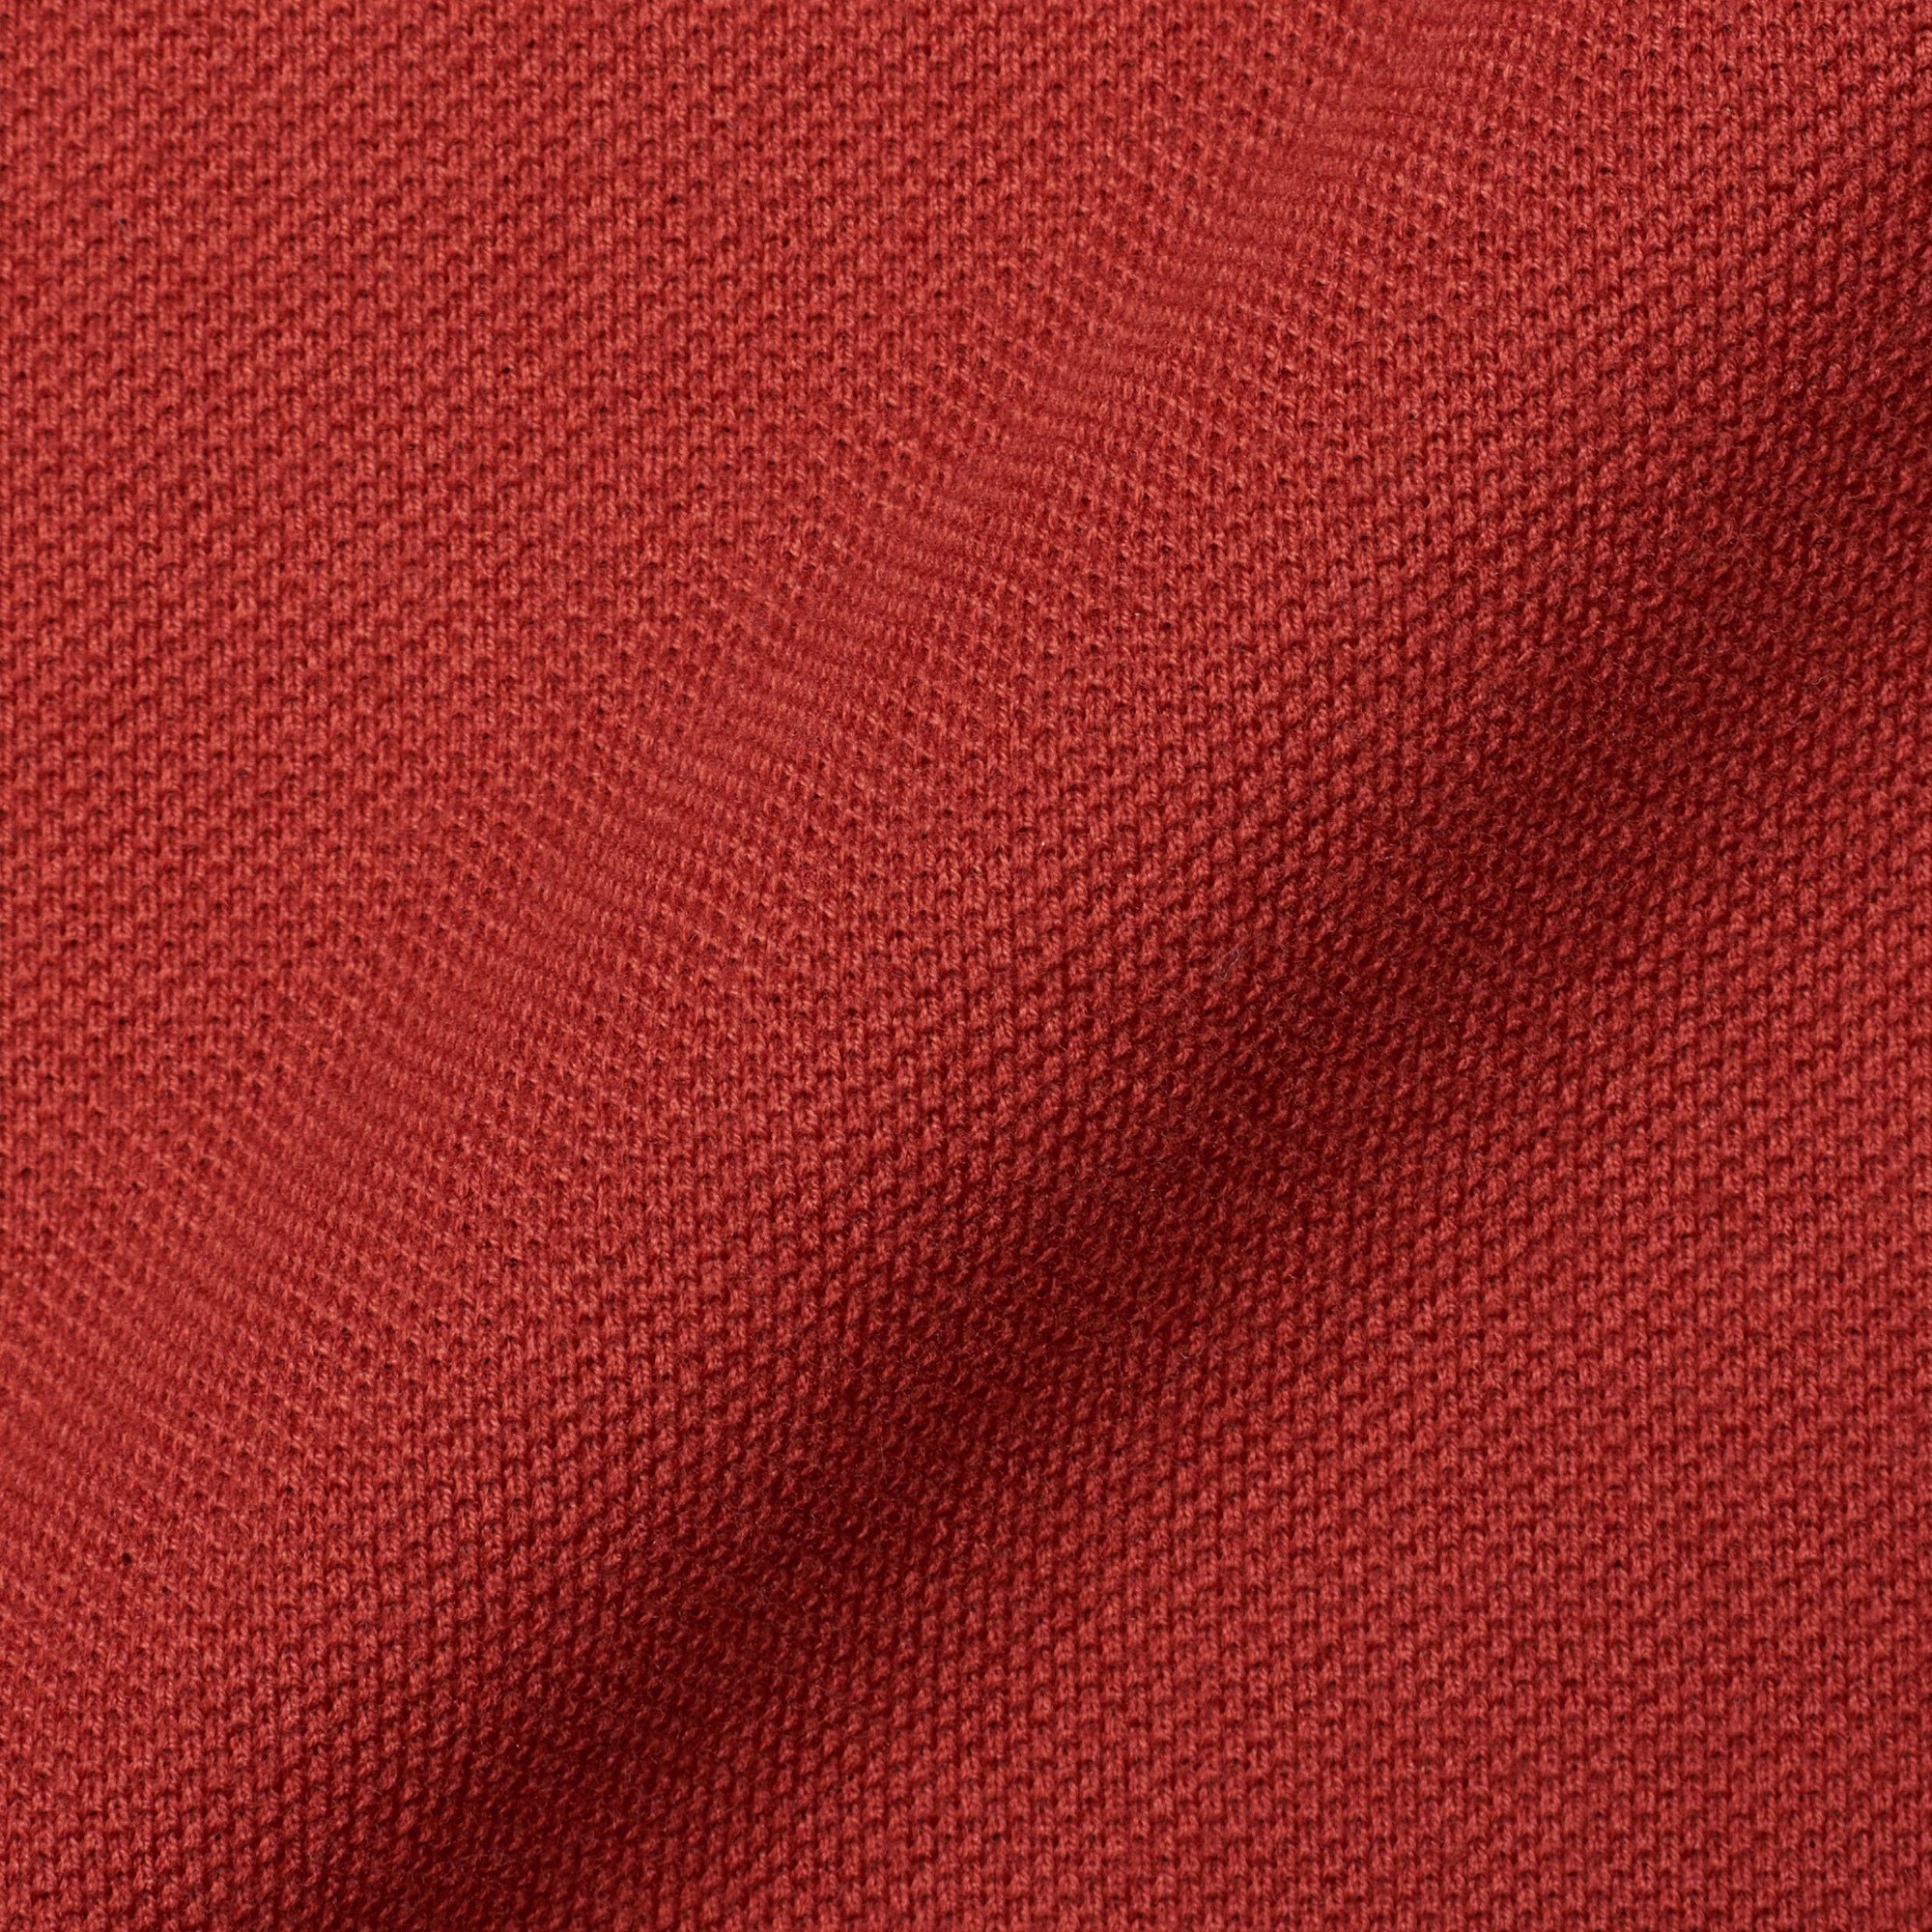 FEDELI "North" Brick Red Cotton Pique Long Sleeve Polo Shirt EU 54 NEW US XL FEDELI